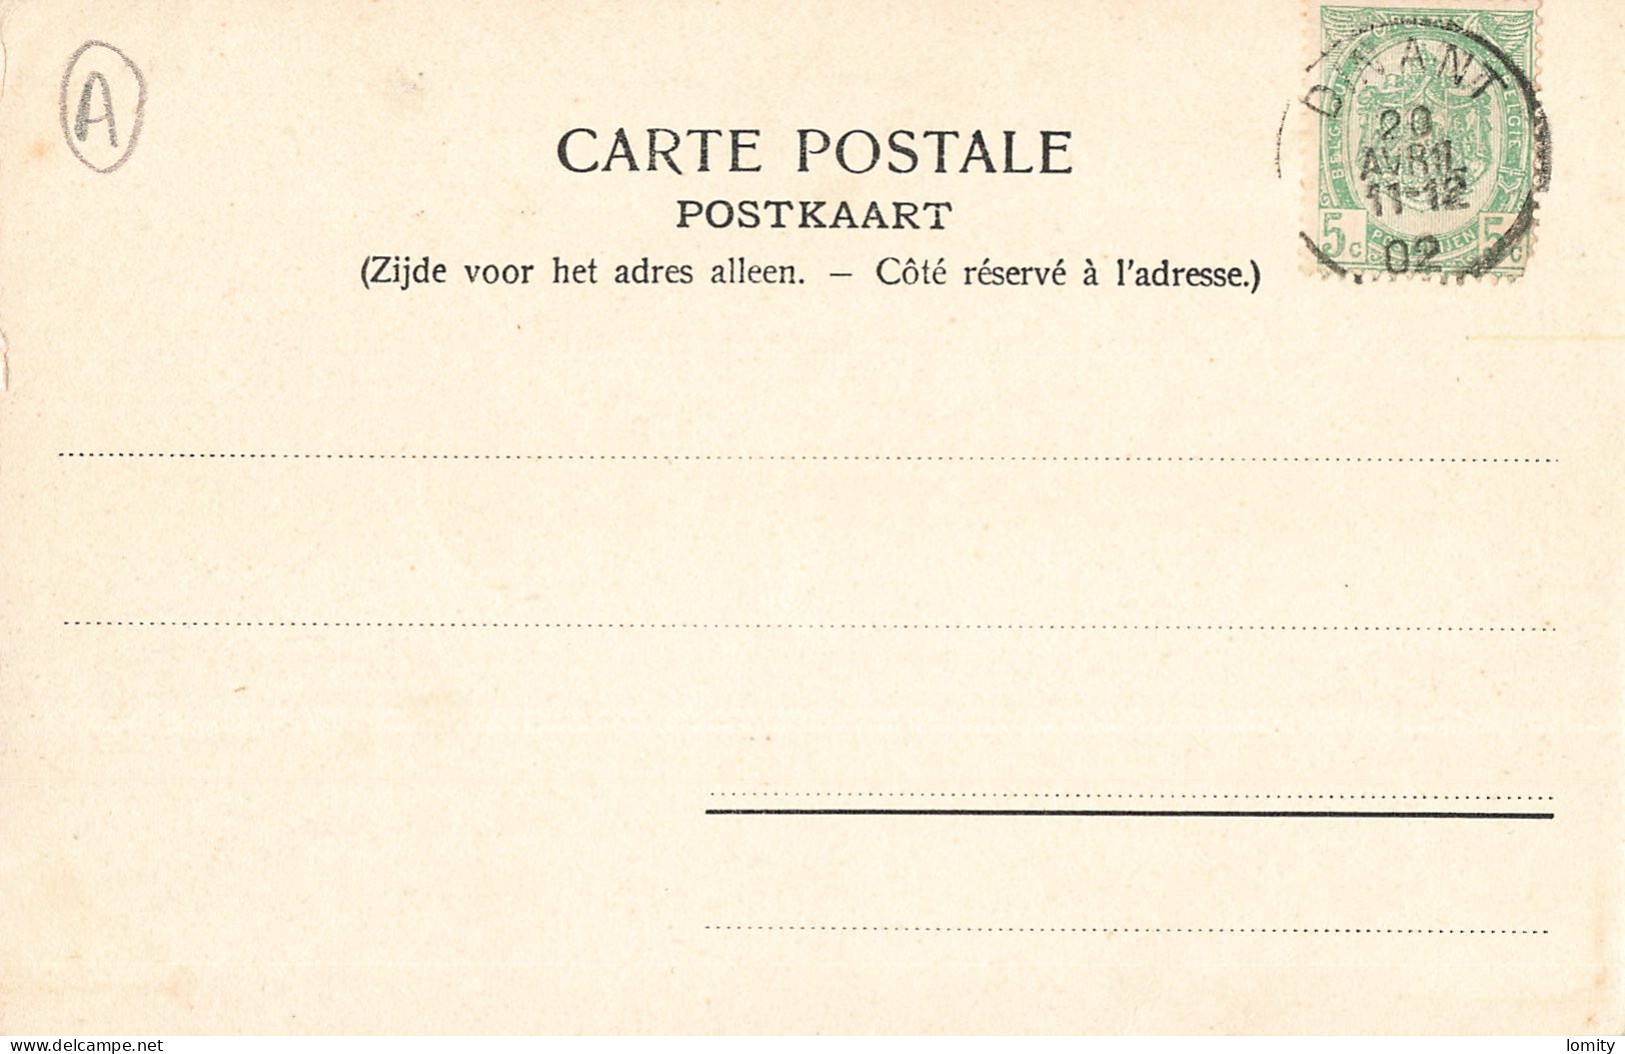 déstockage lot 46 cartes postales CPA Belgique Blankenberghe Arlon Namur Dinant Liege Gand Ostende Bruxelles